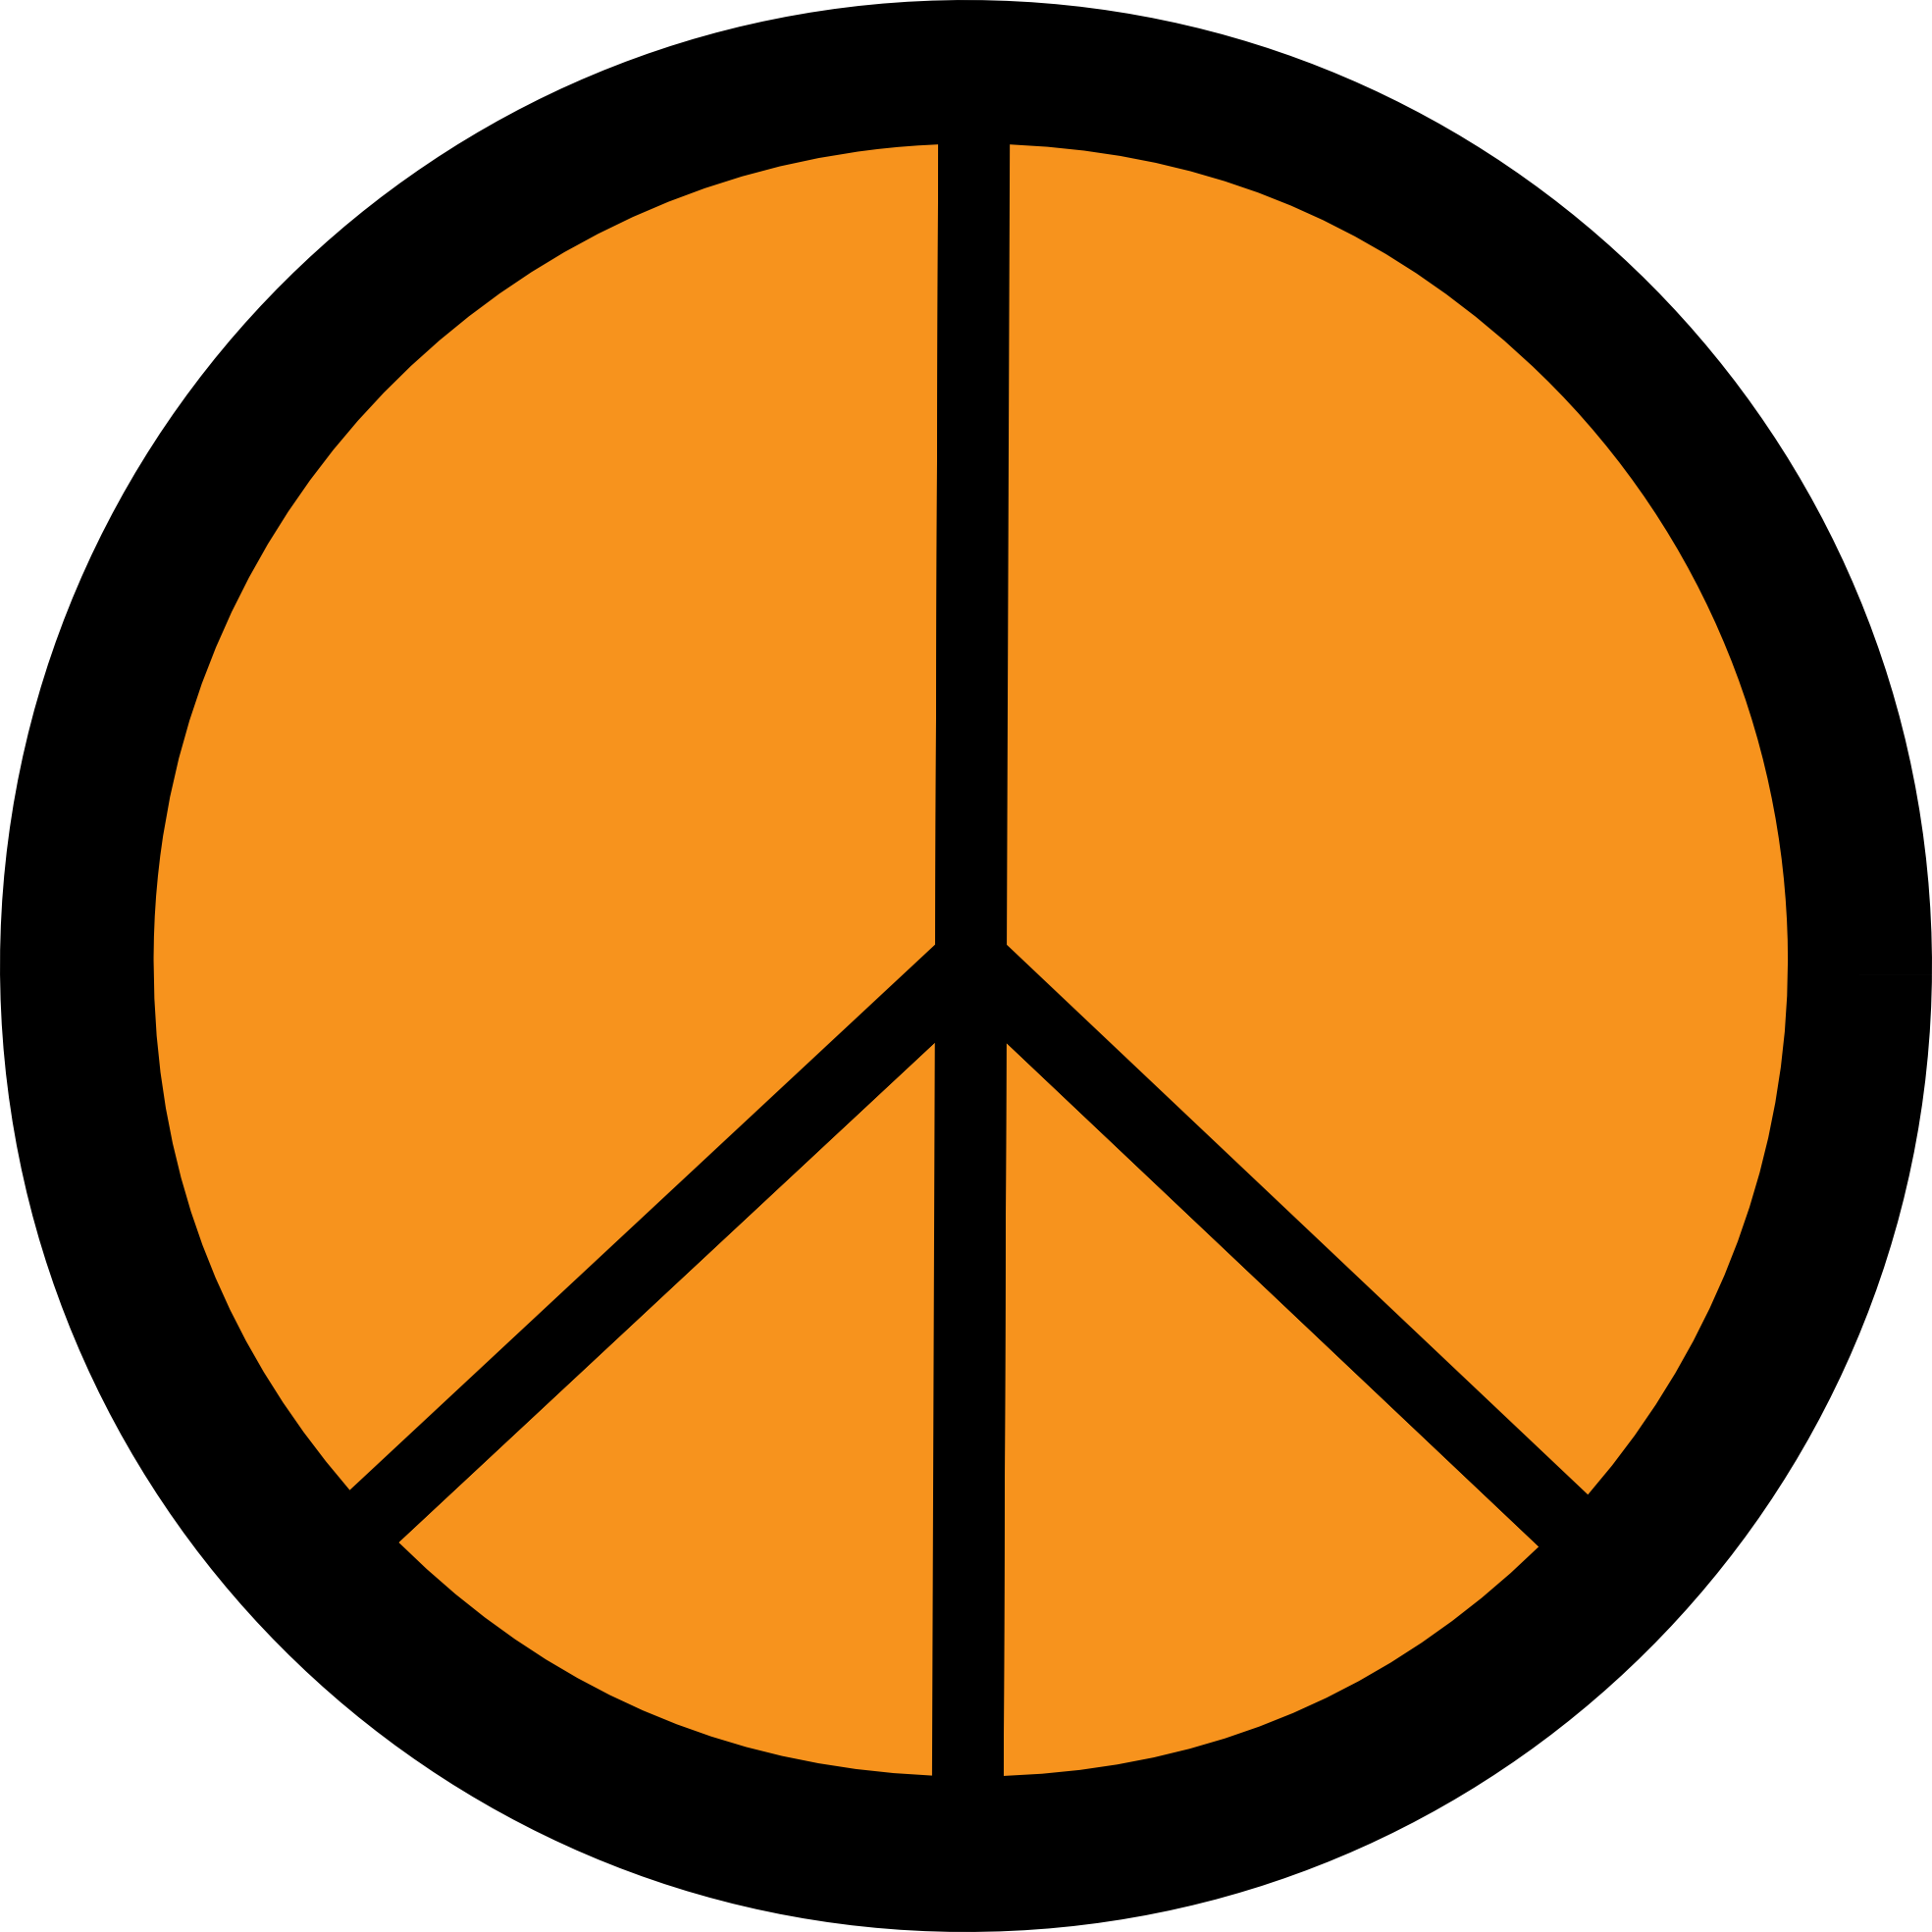 Peace sign art clipart image